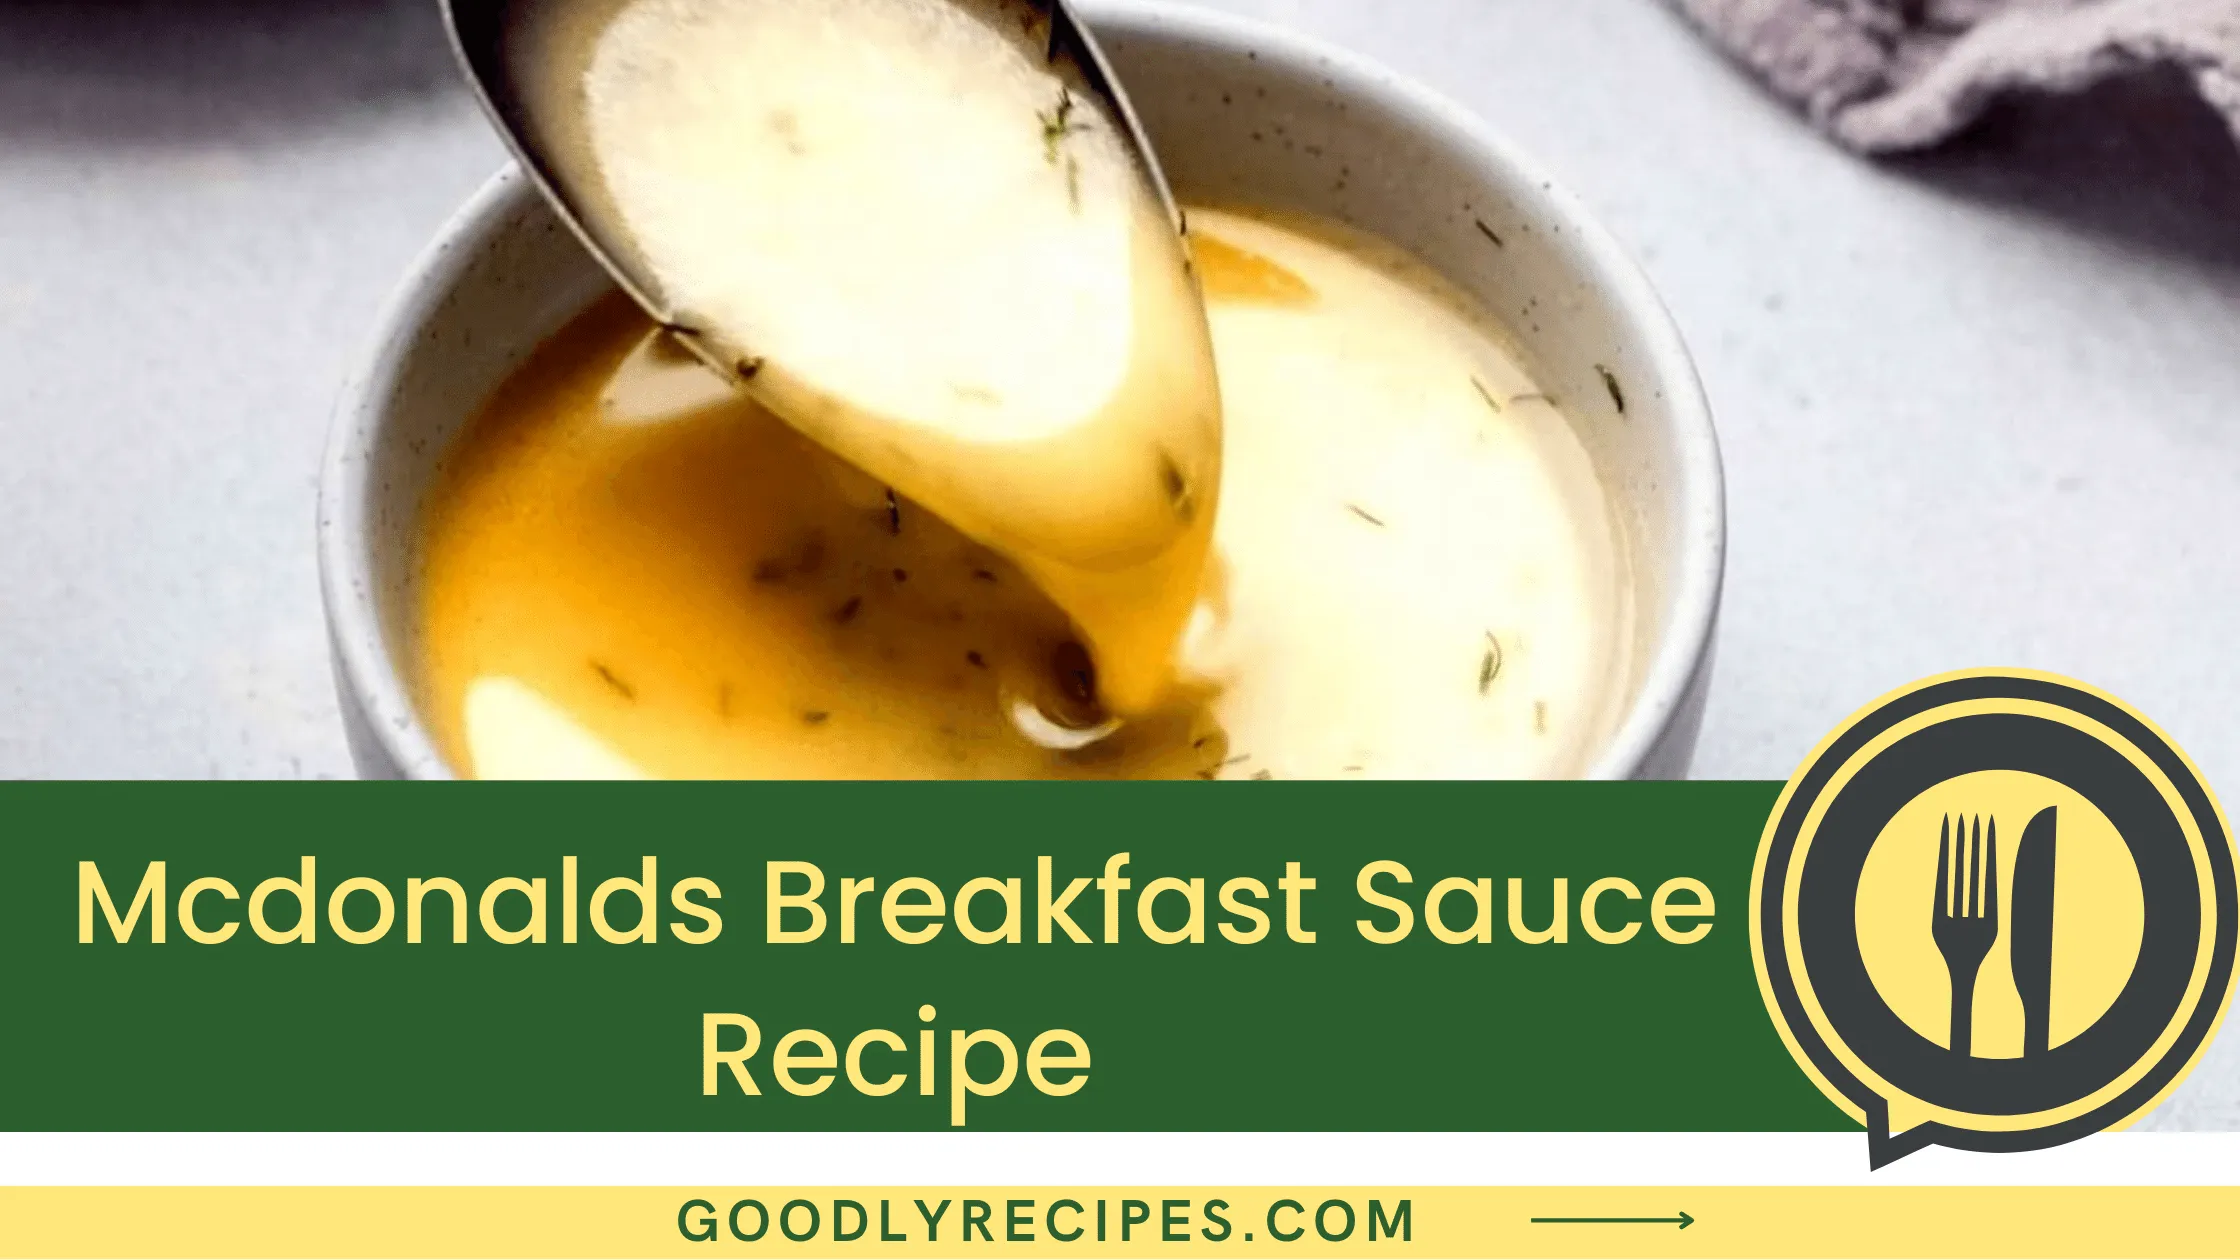 Mcdonalds Breakfast Sauce Recipe - For Food Lovers